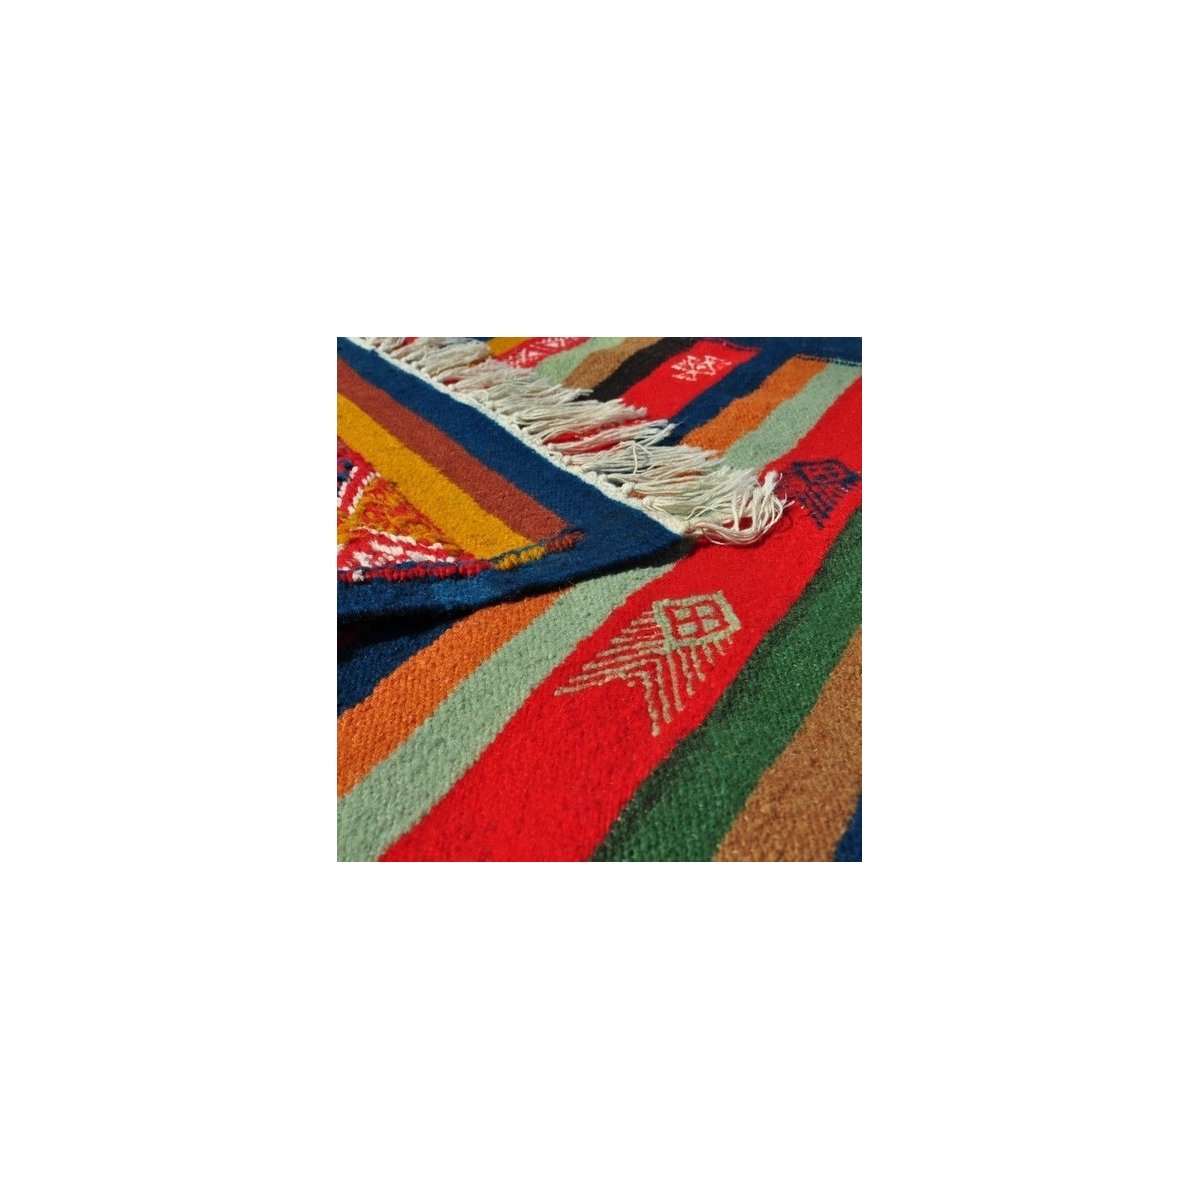 Tapete berbere Tapete Kilim longo Foudha 65x200 Multicor (Tecidos à mão, Lã) Tapete tunisiano kilim, estilo marroquino. Tapete r